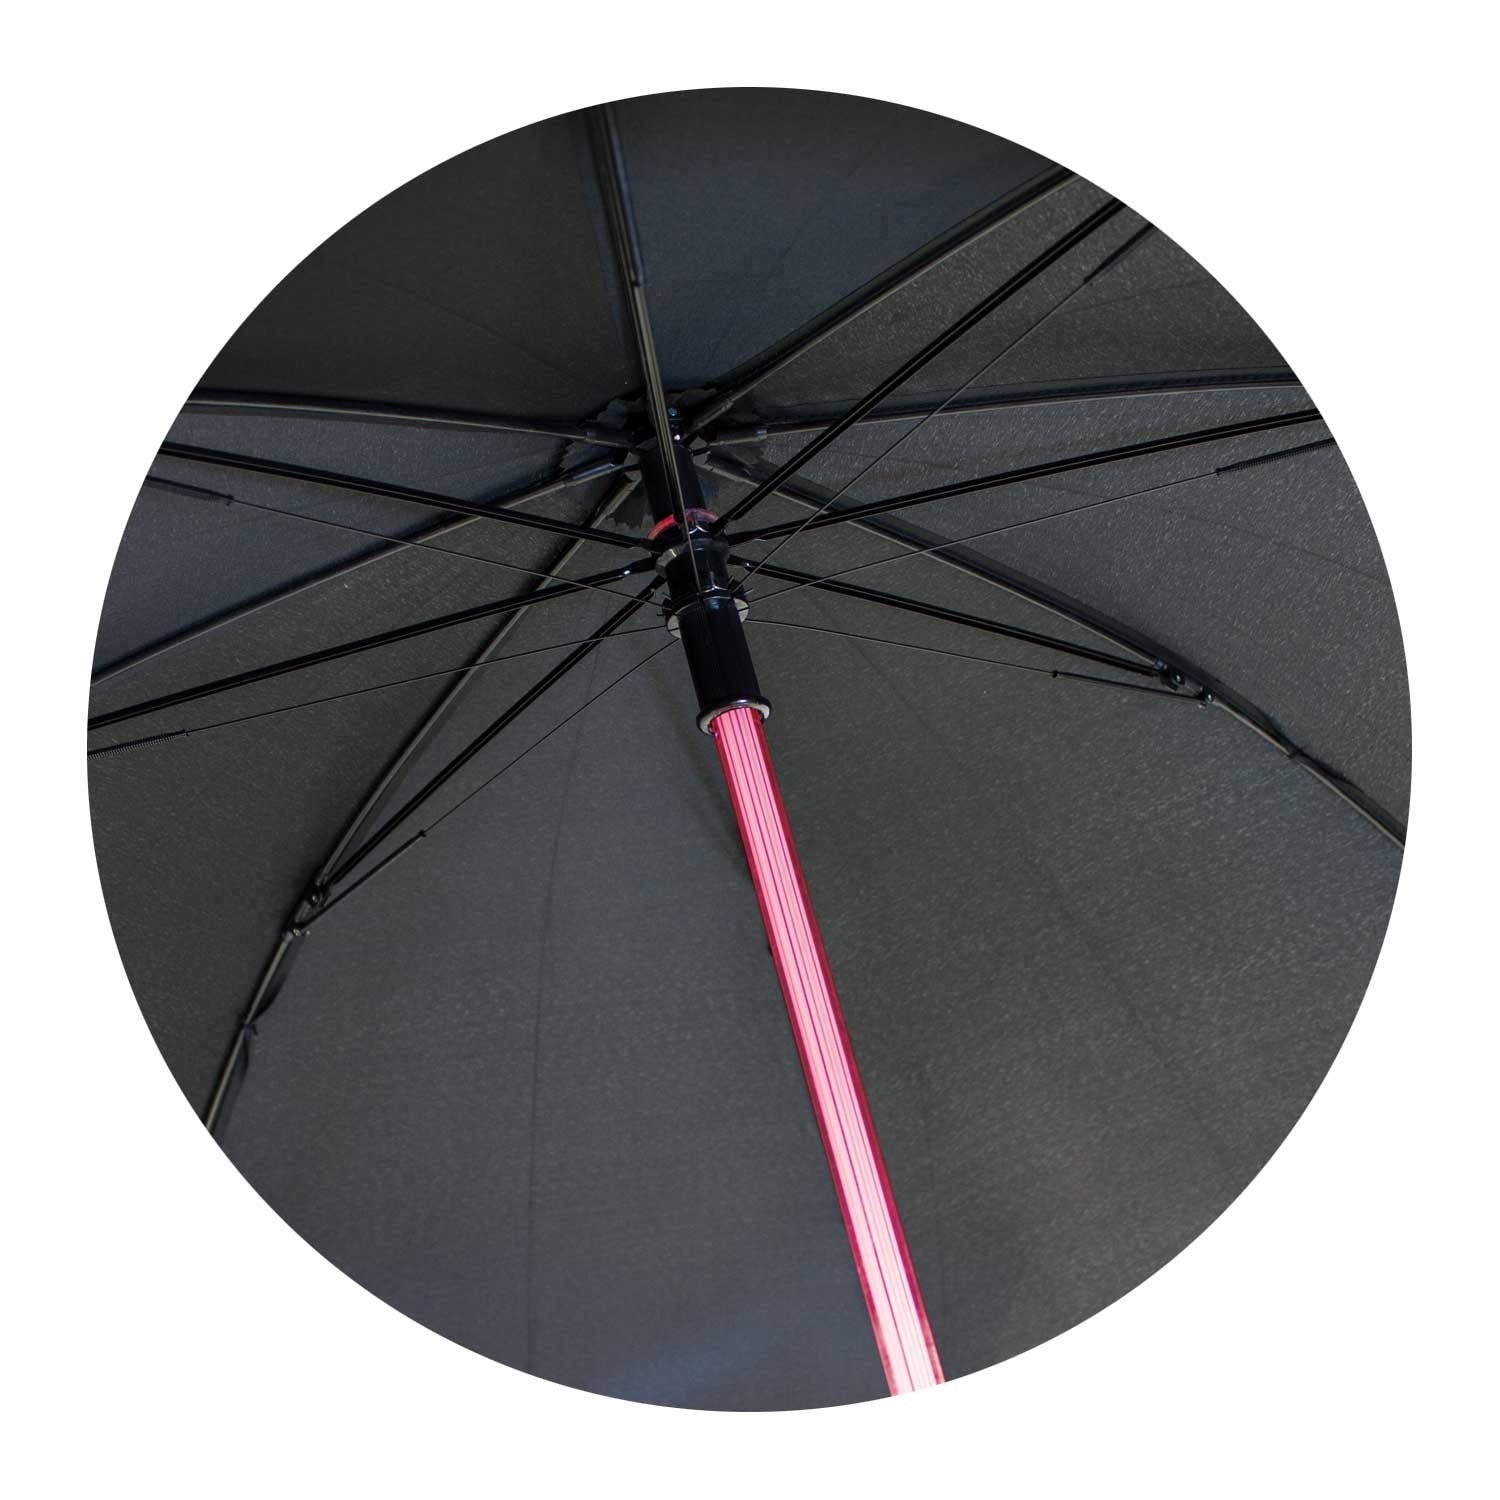 ZEUS®️-light-saber-light-up-umbrella-safety-umbrella-built-in-torch-manual-open-black-umbrella-2